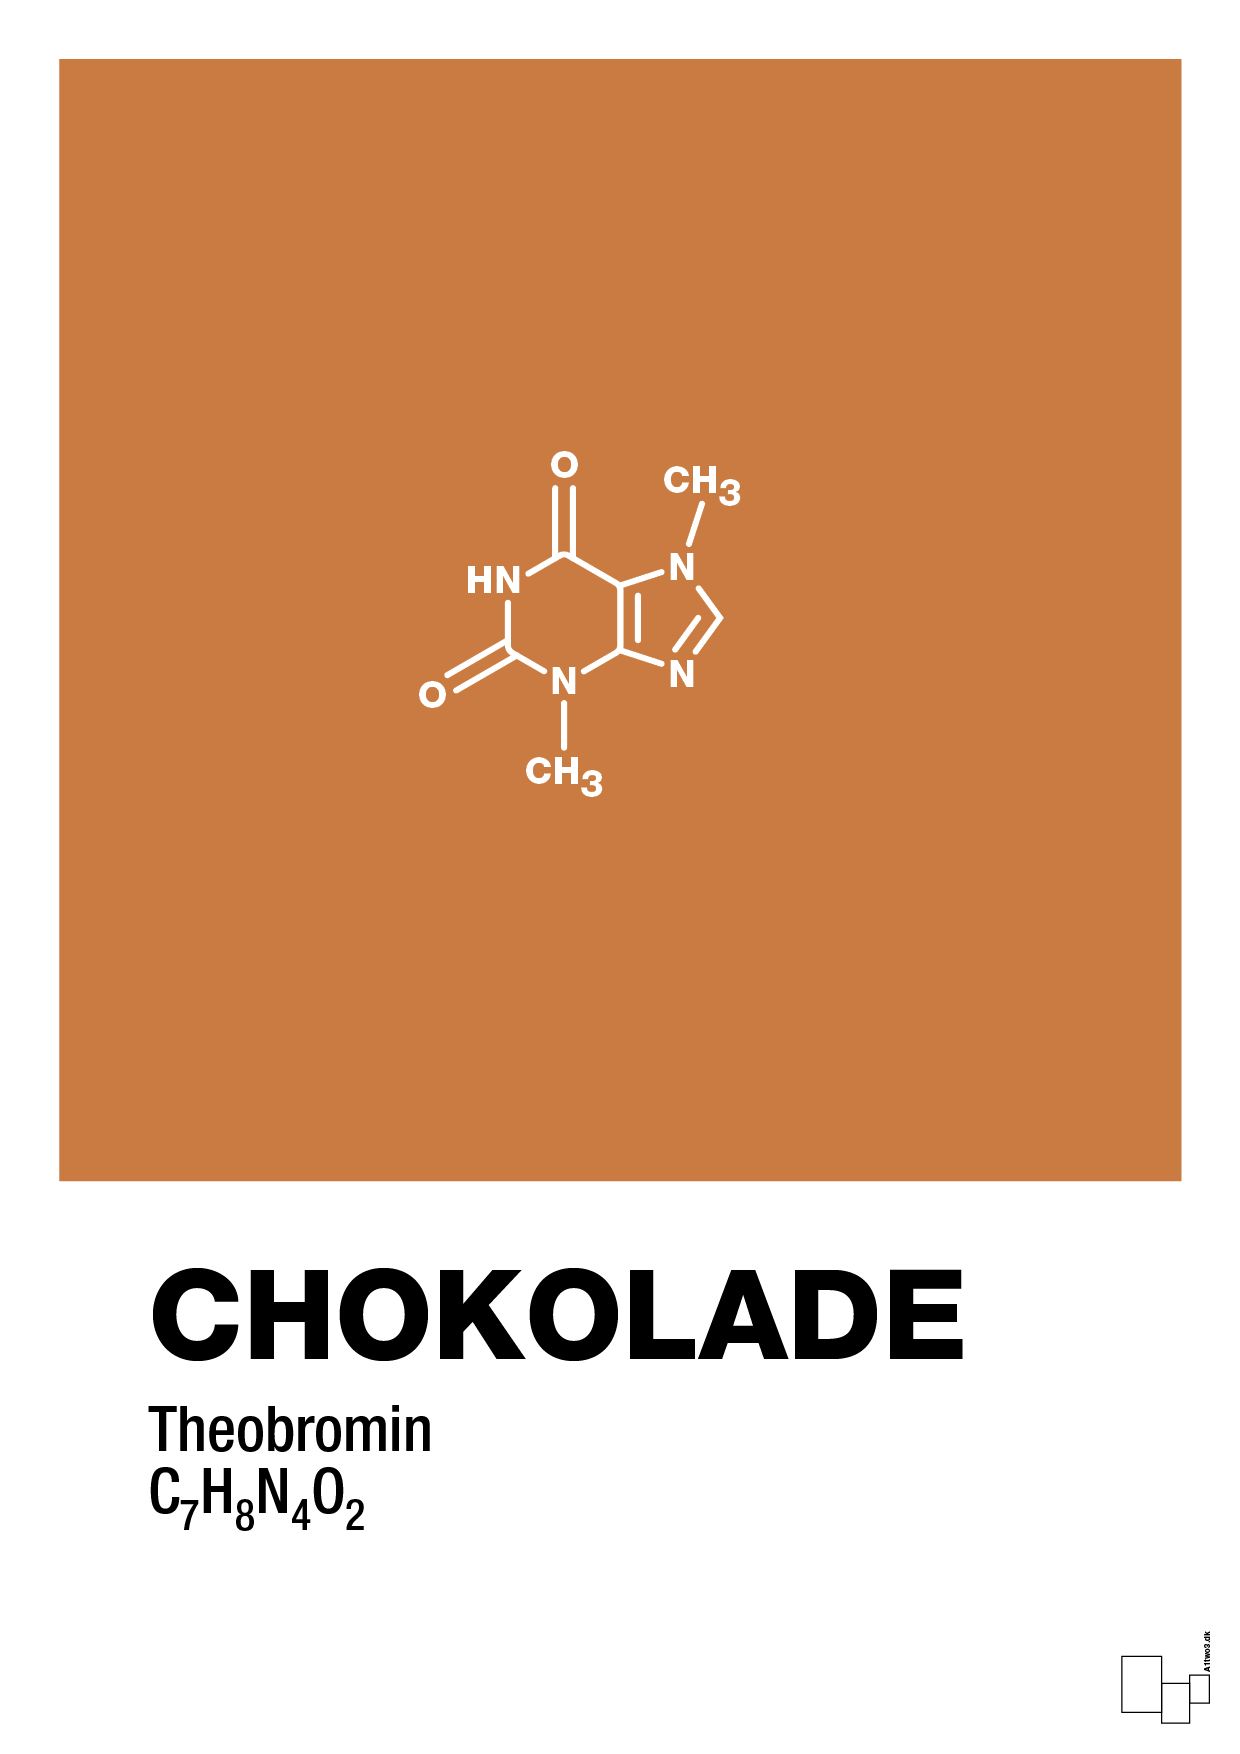 chokolade - Plakat med Videnskab i Rumba Orange